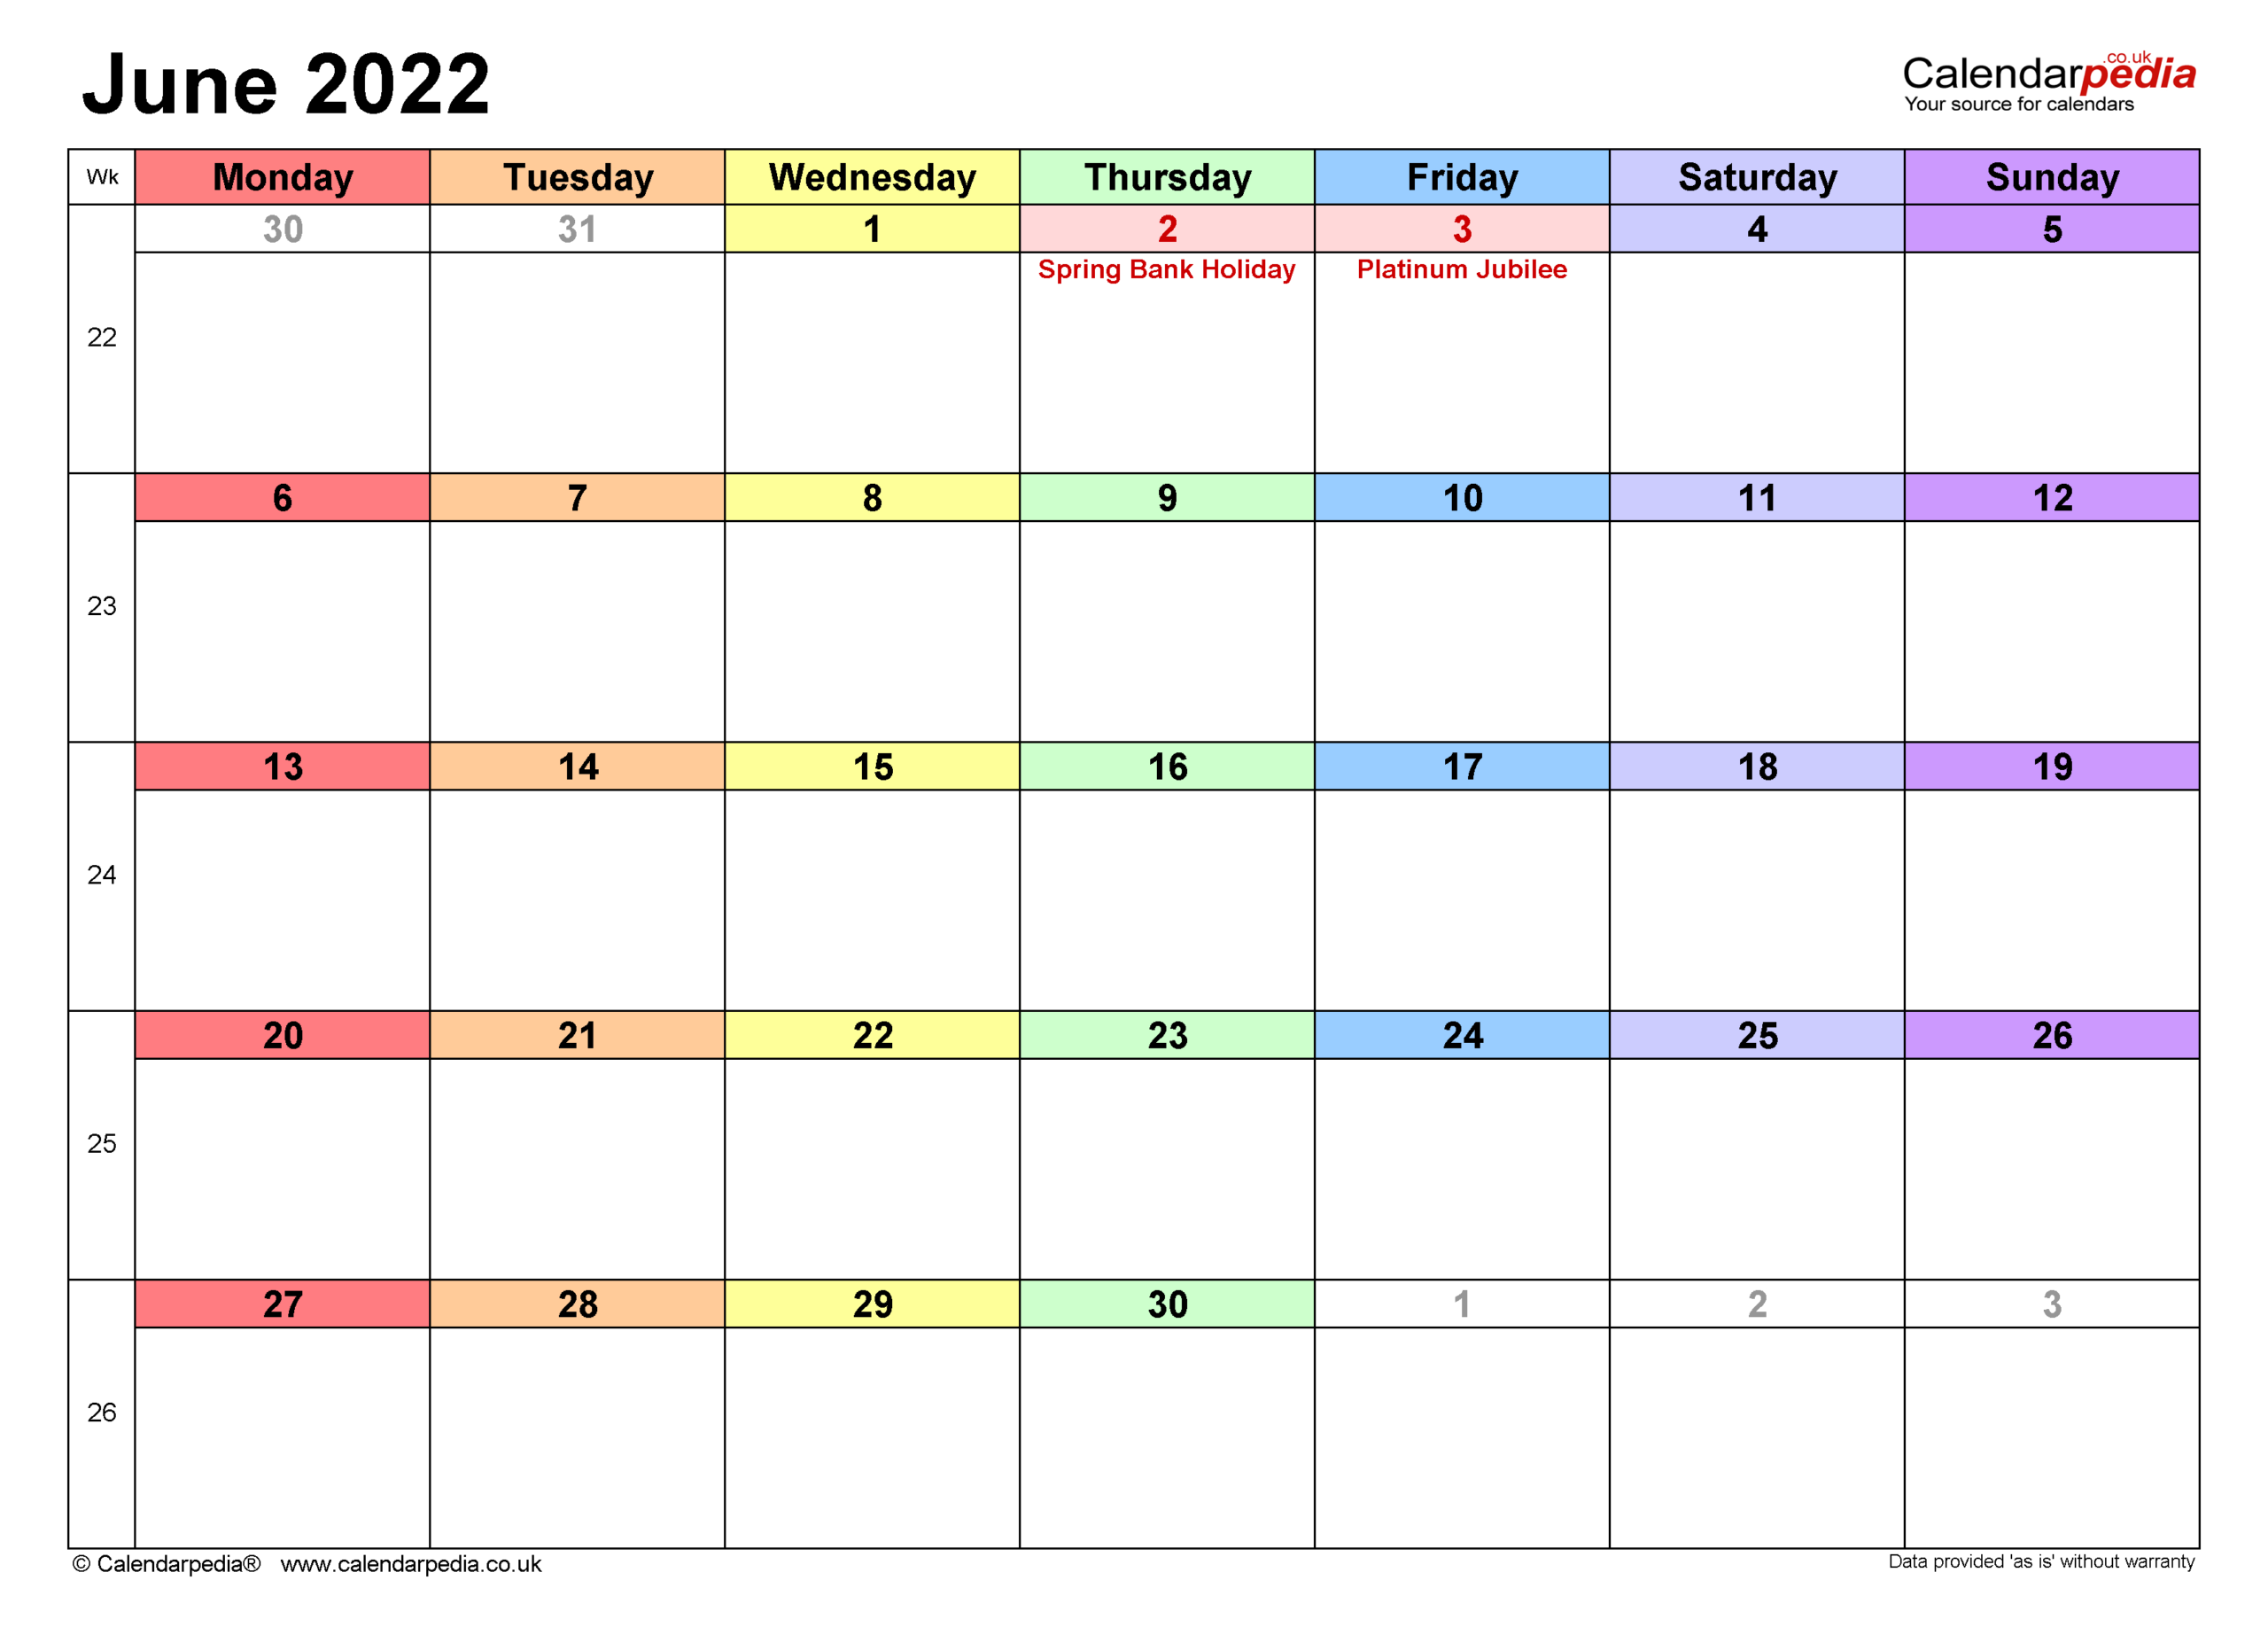 Get June 2022 Calendar Image